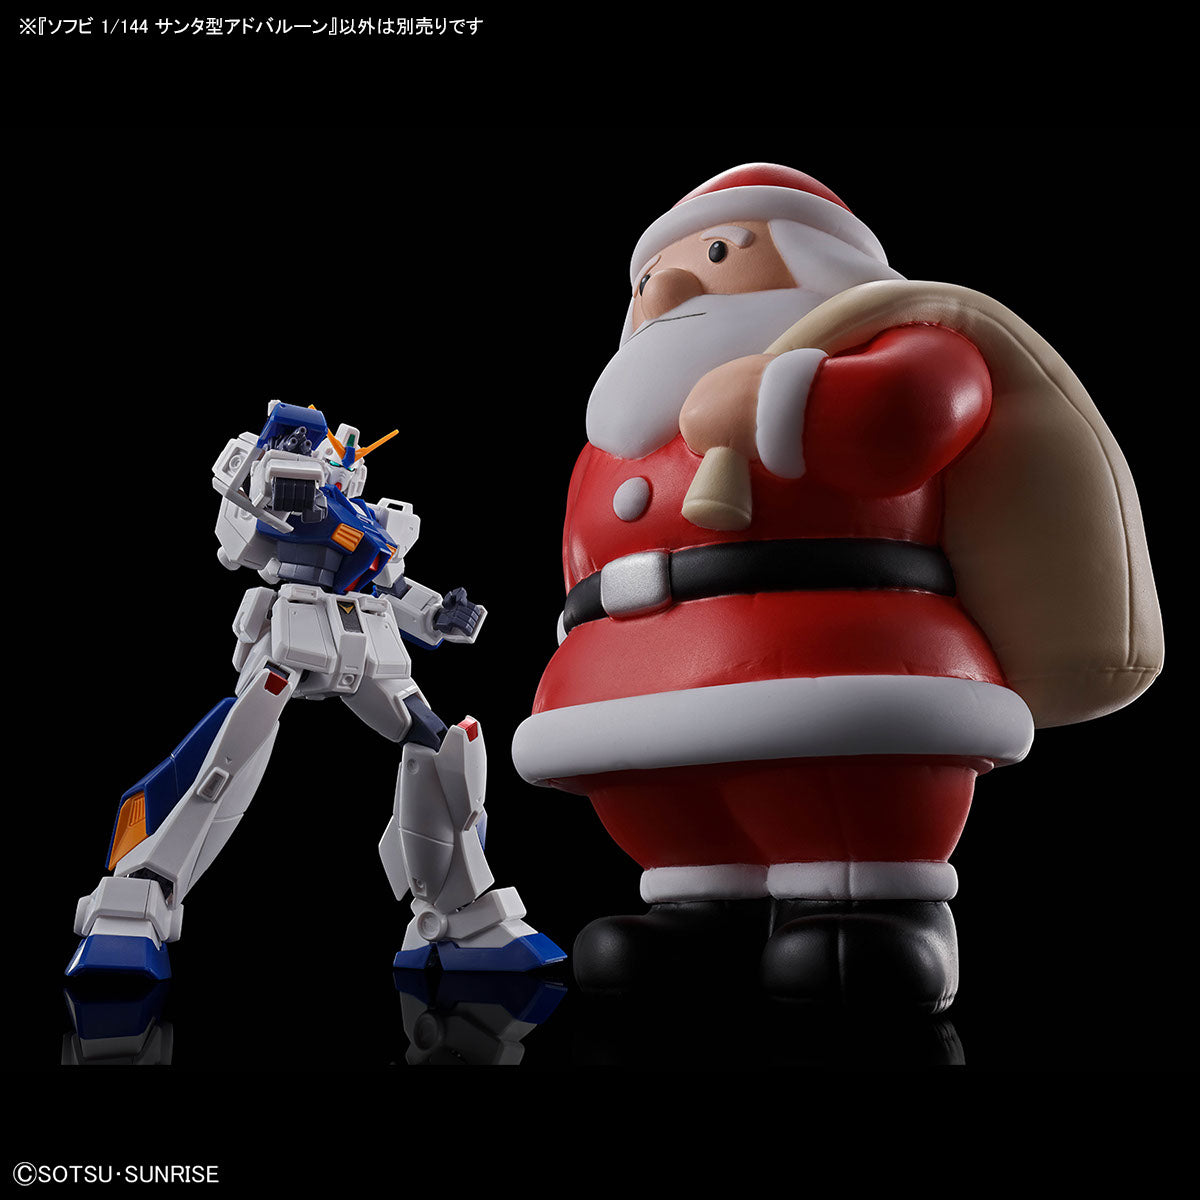 Gundam Base Limited Soft Vinyl 1/144 Santa Shaped Ad Balloon (December & January Ship Date)